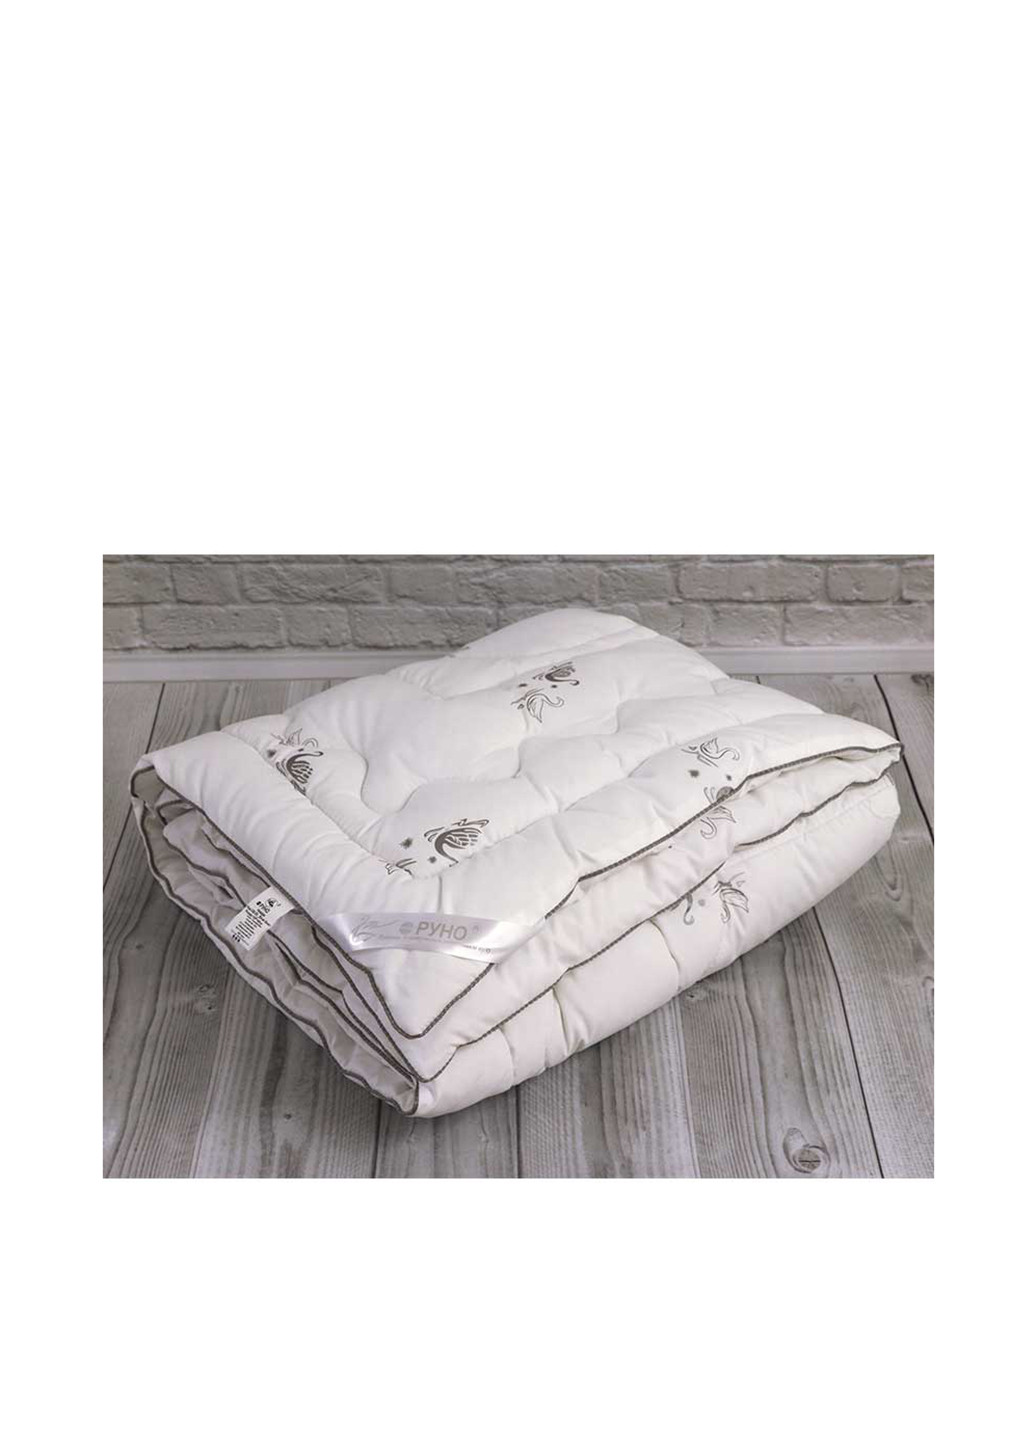 Одеяло детское 140х105 пуховое Silver Swan_demi Руно (249011872)